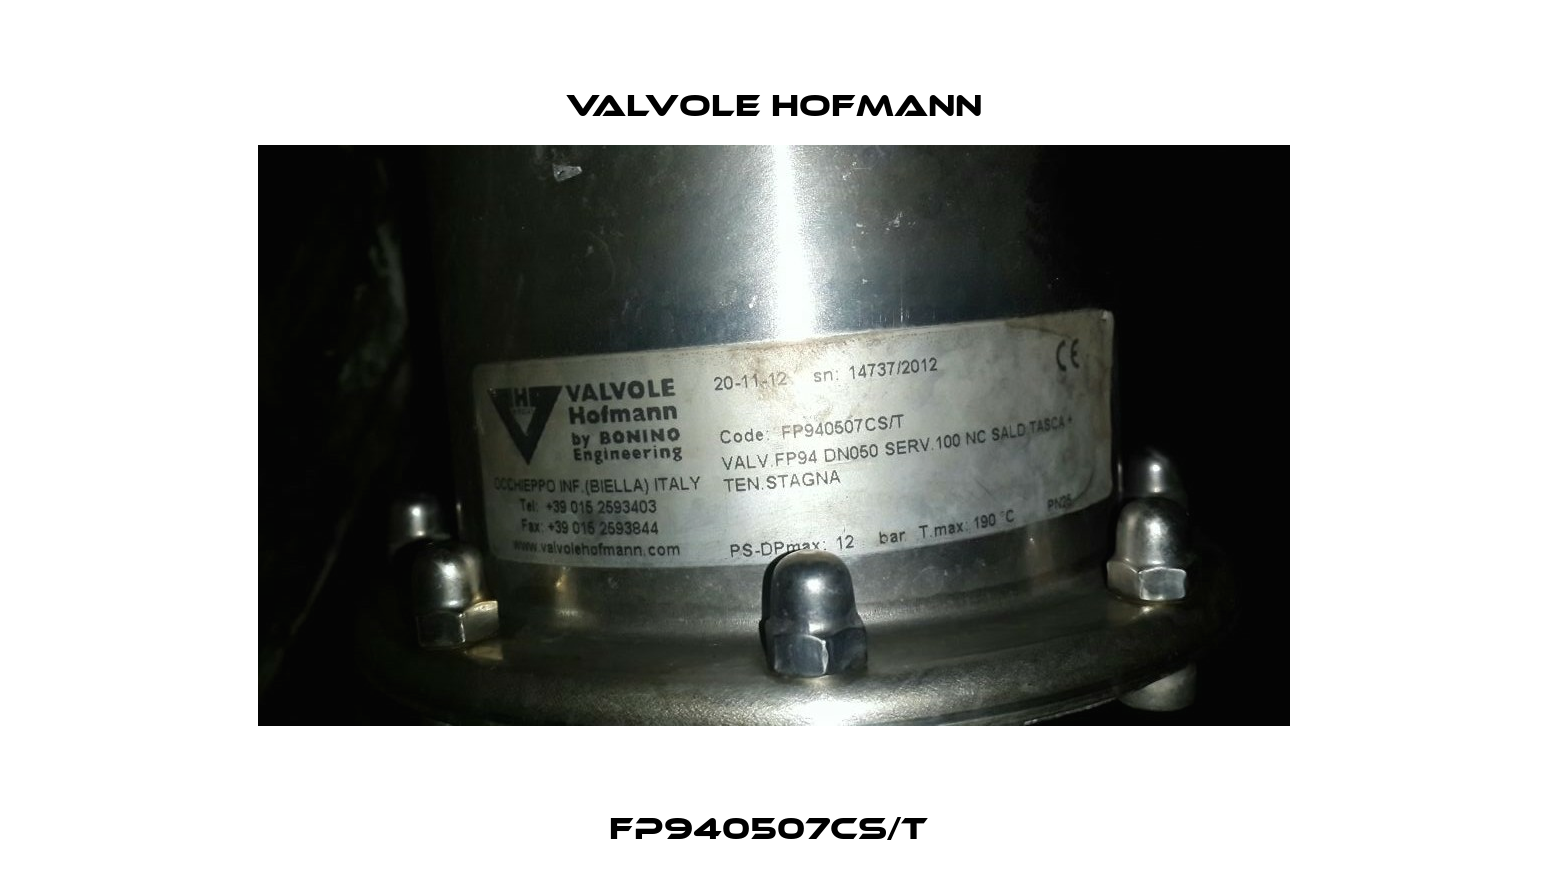 FP940507CS/T  Valvole Hofmann